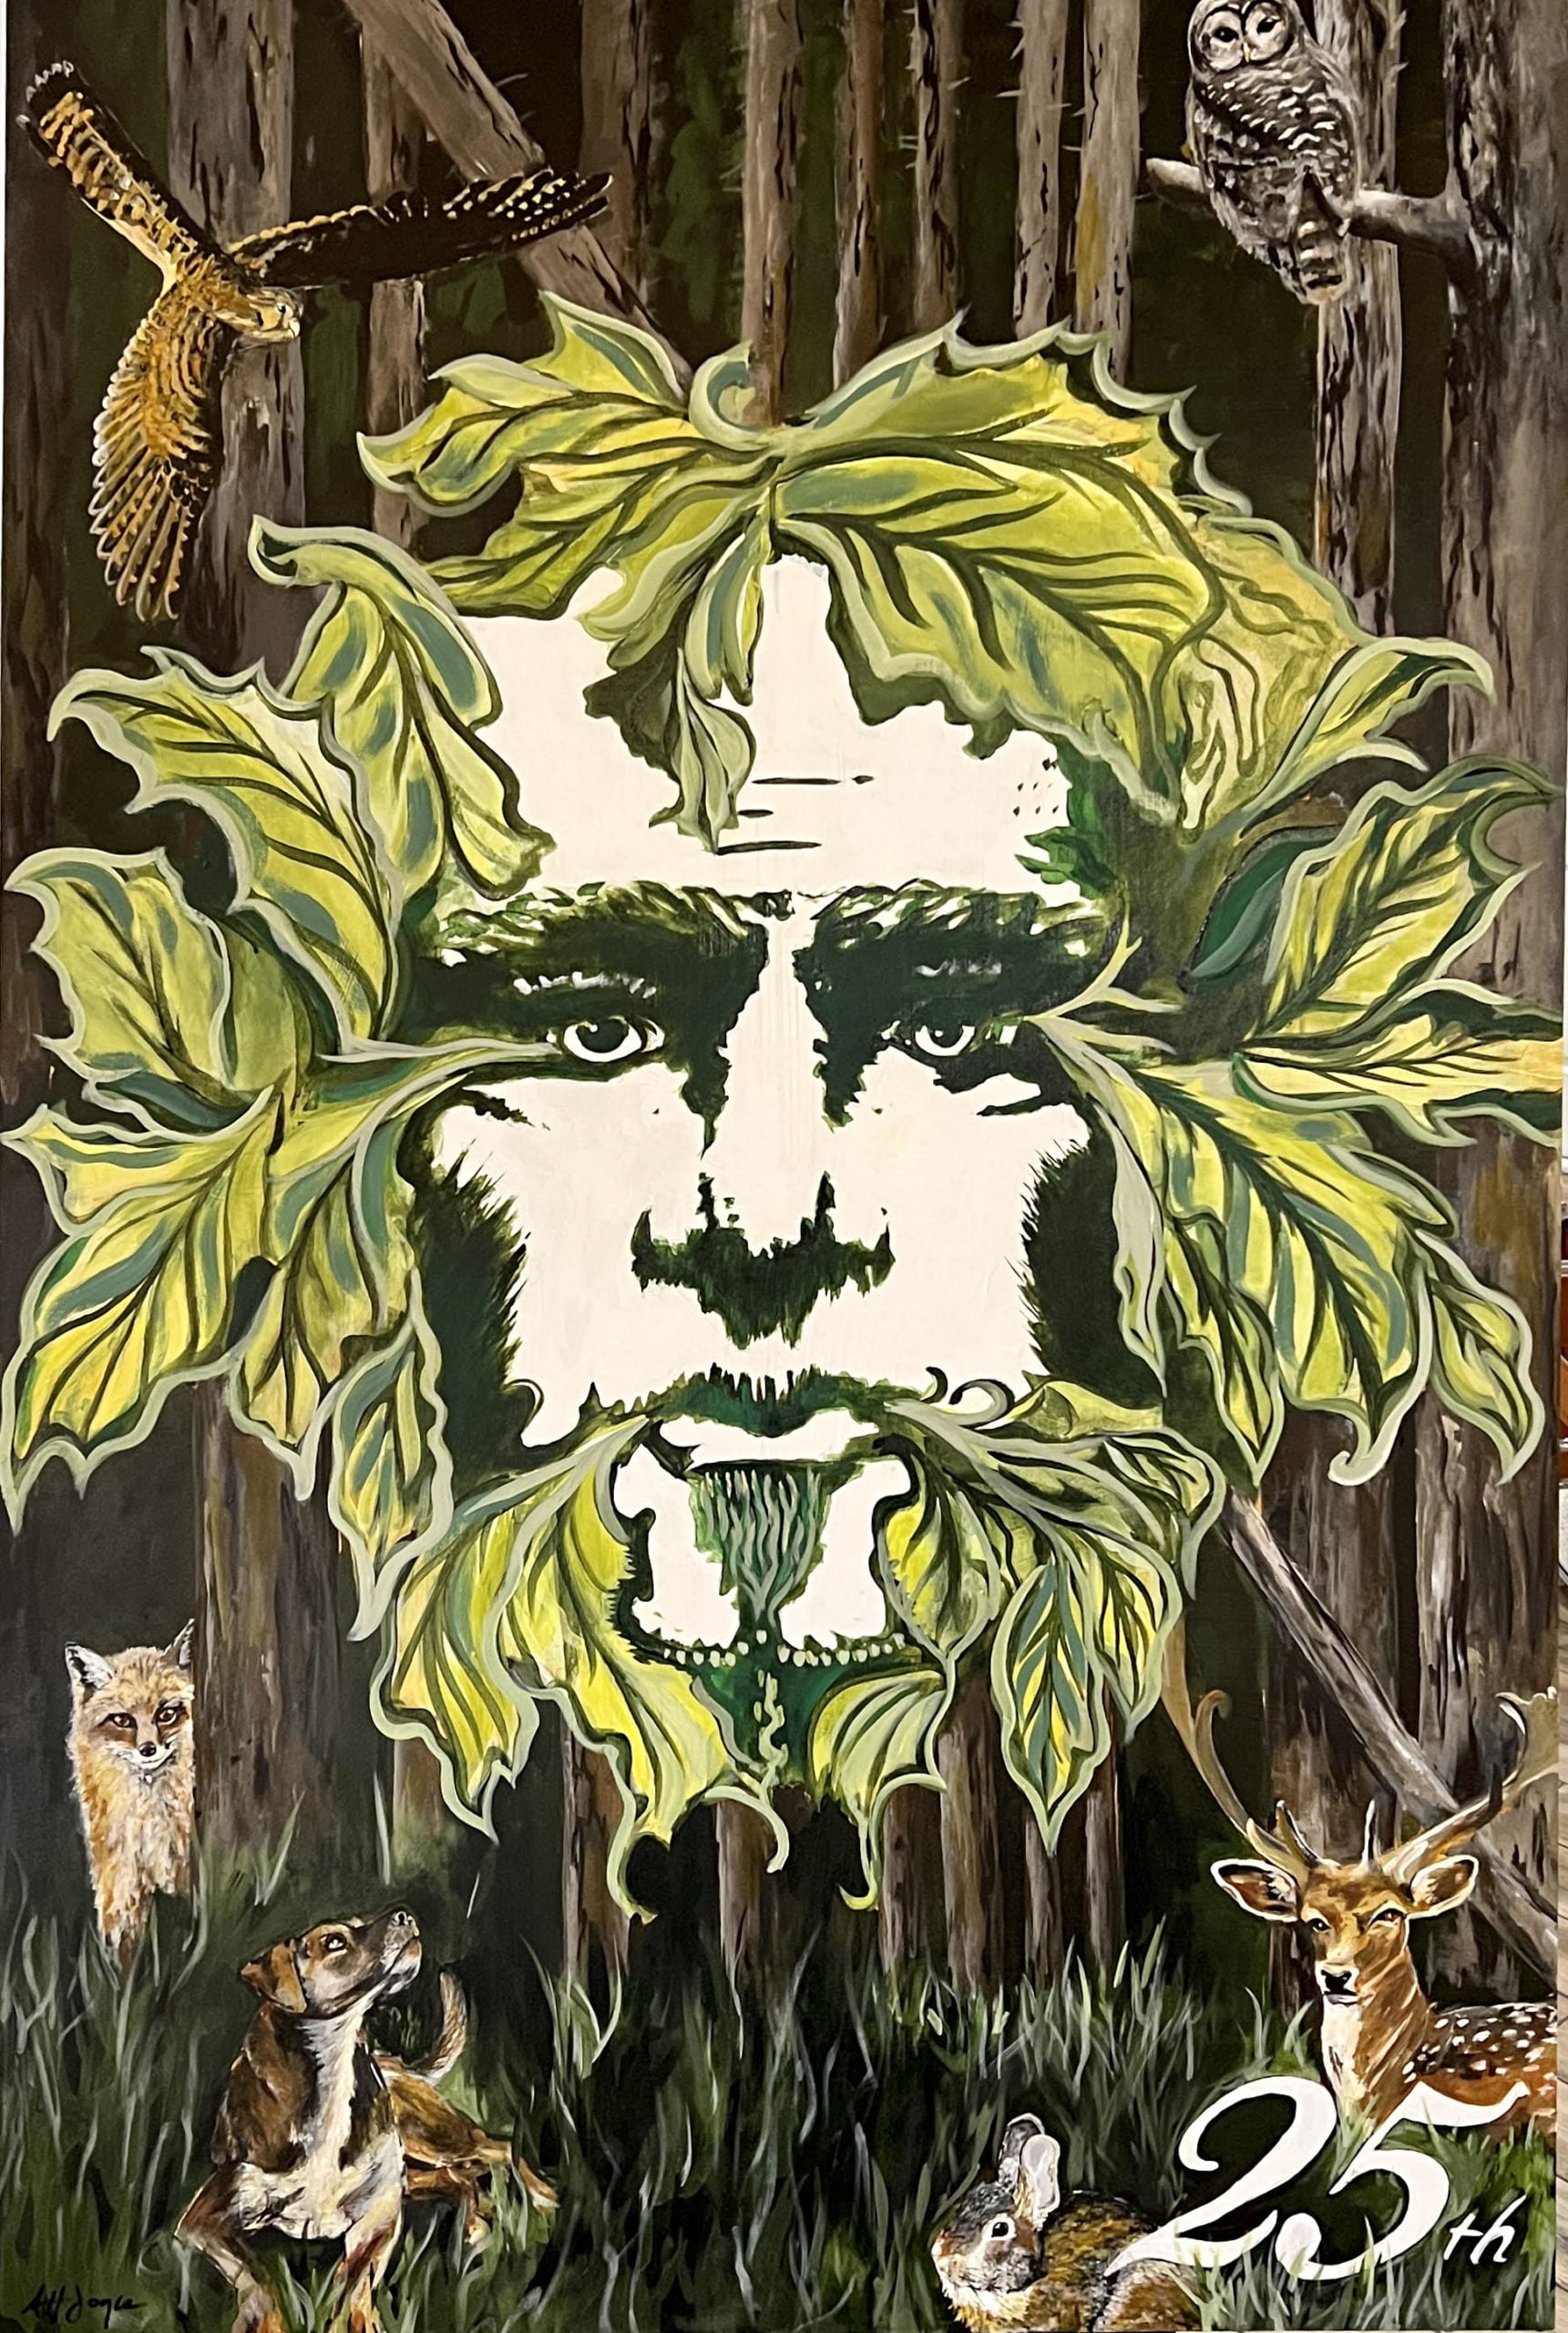 Green Man 25th Anniversary Painting